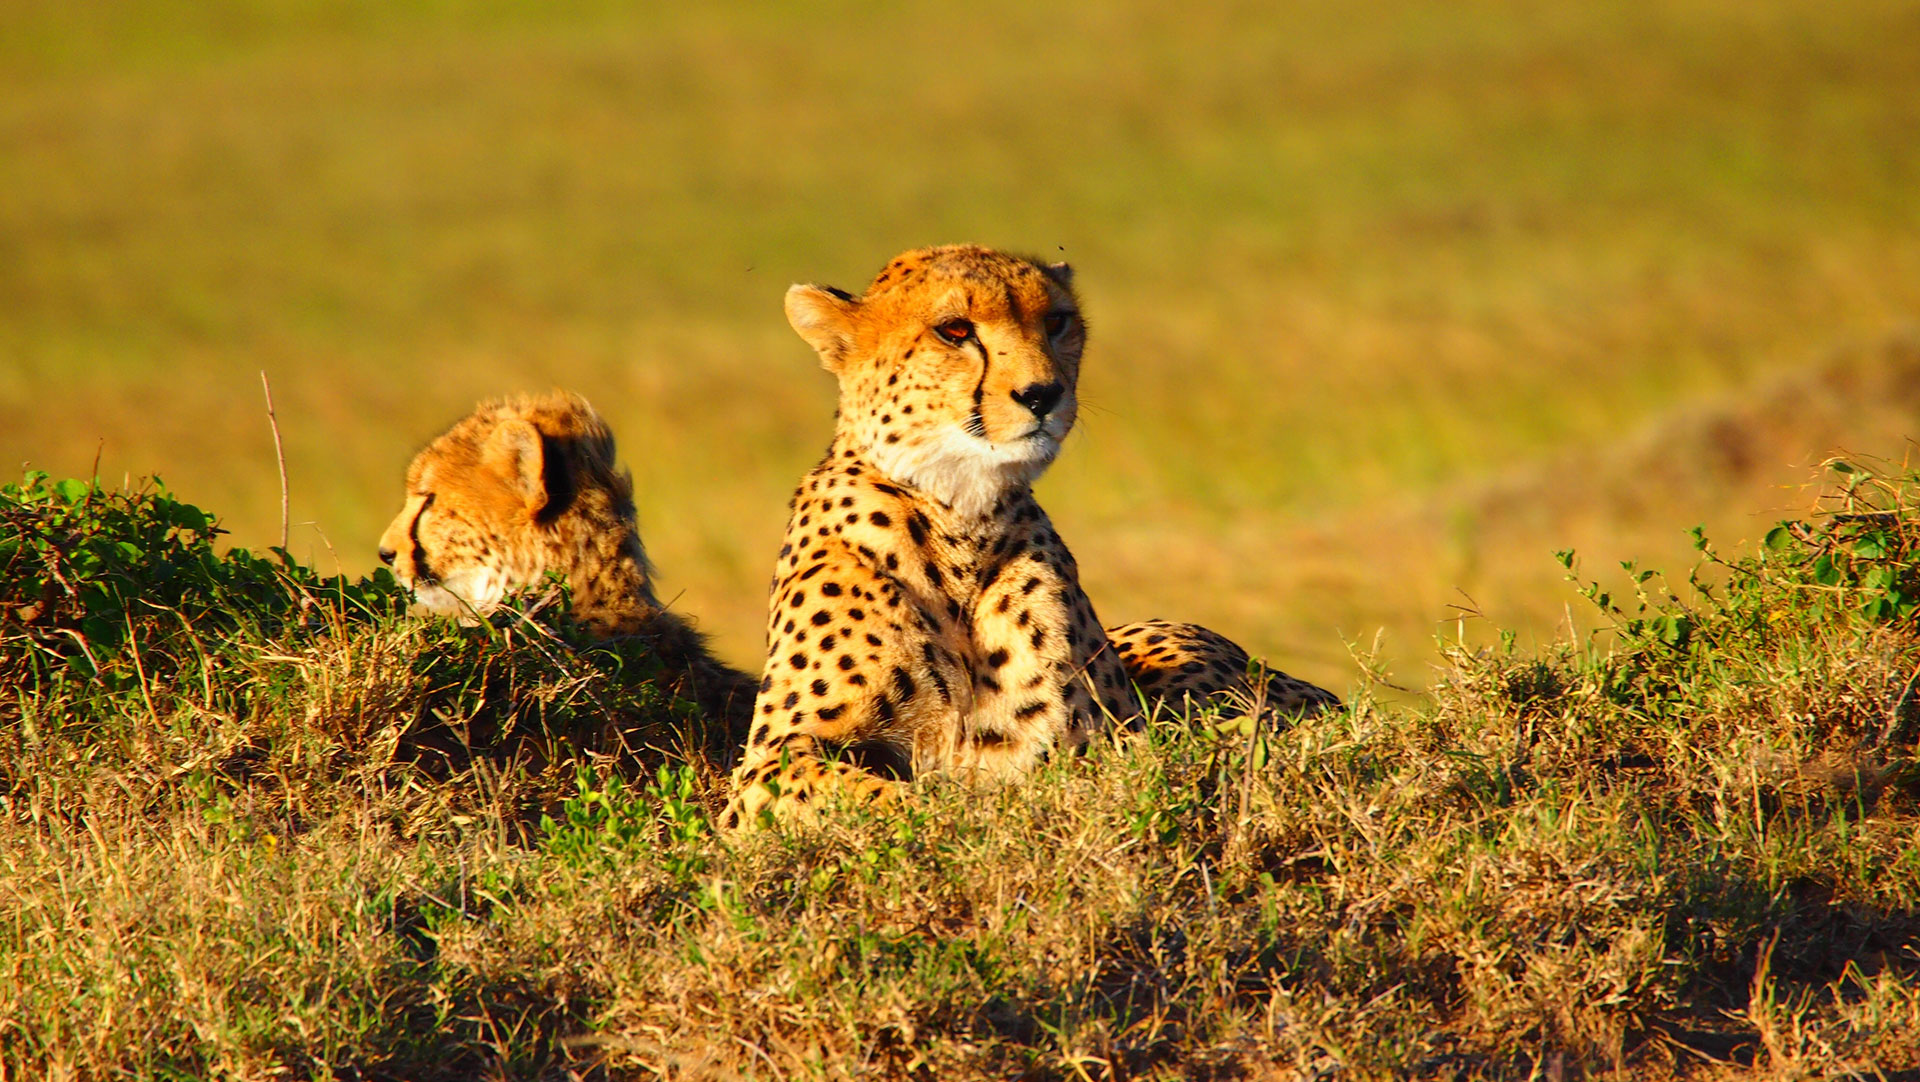 Kenia safari   4 